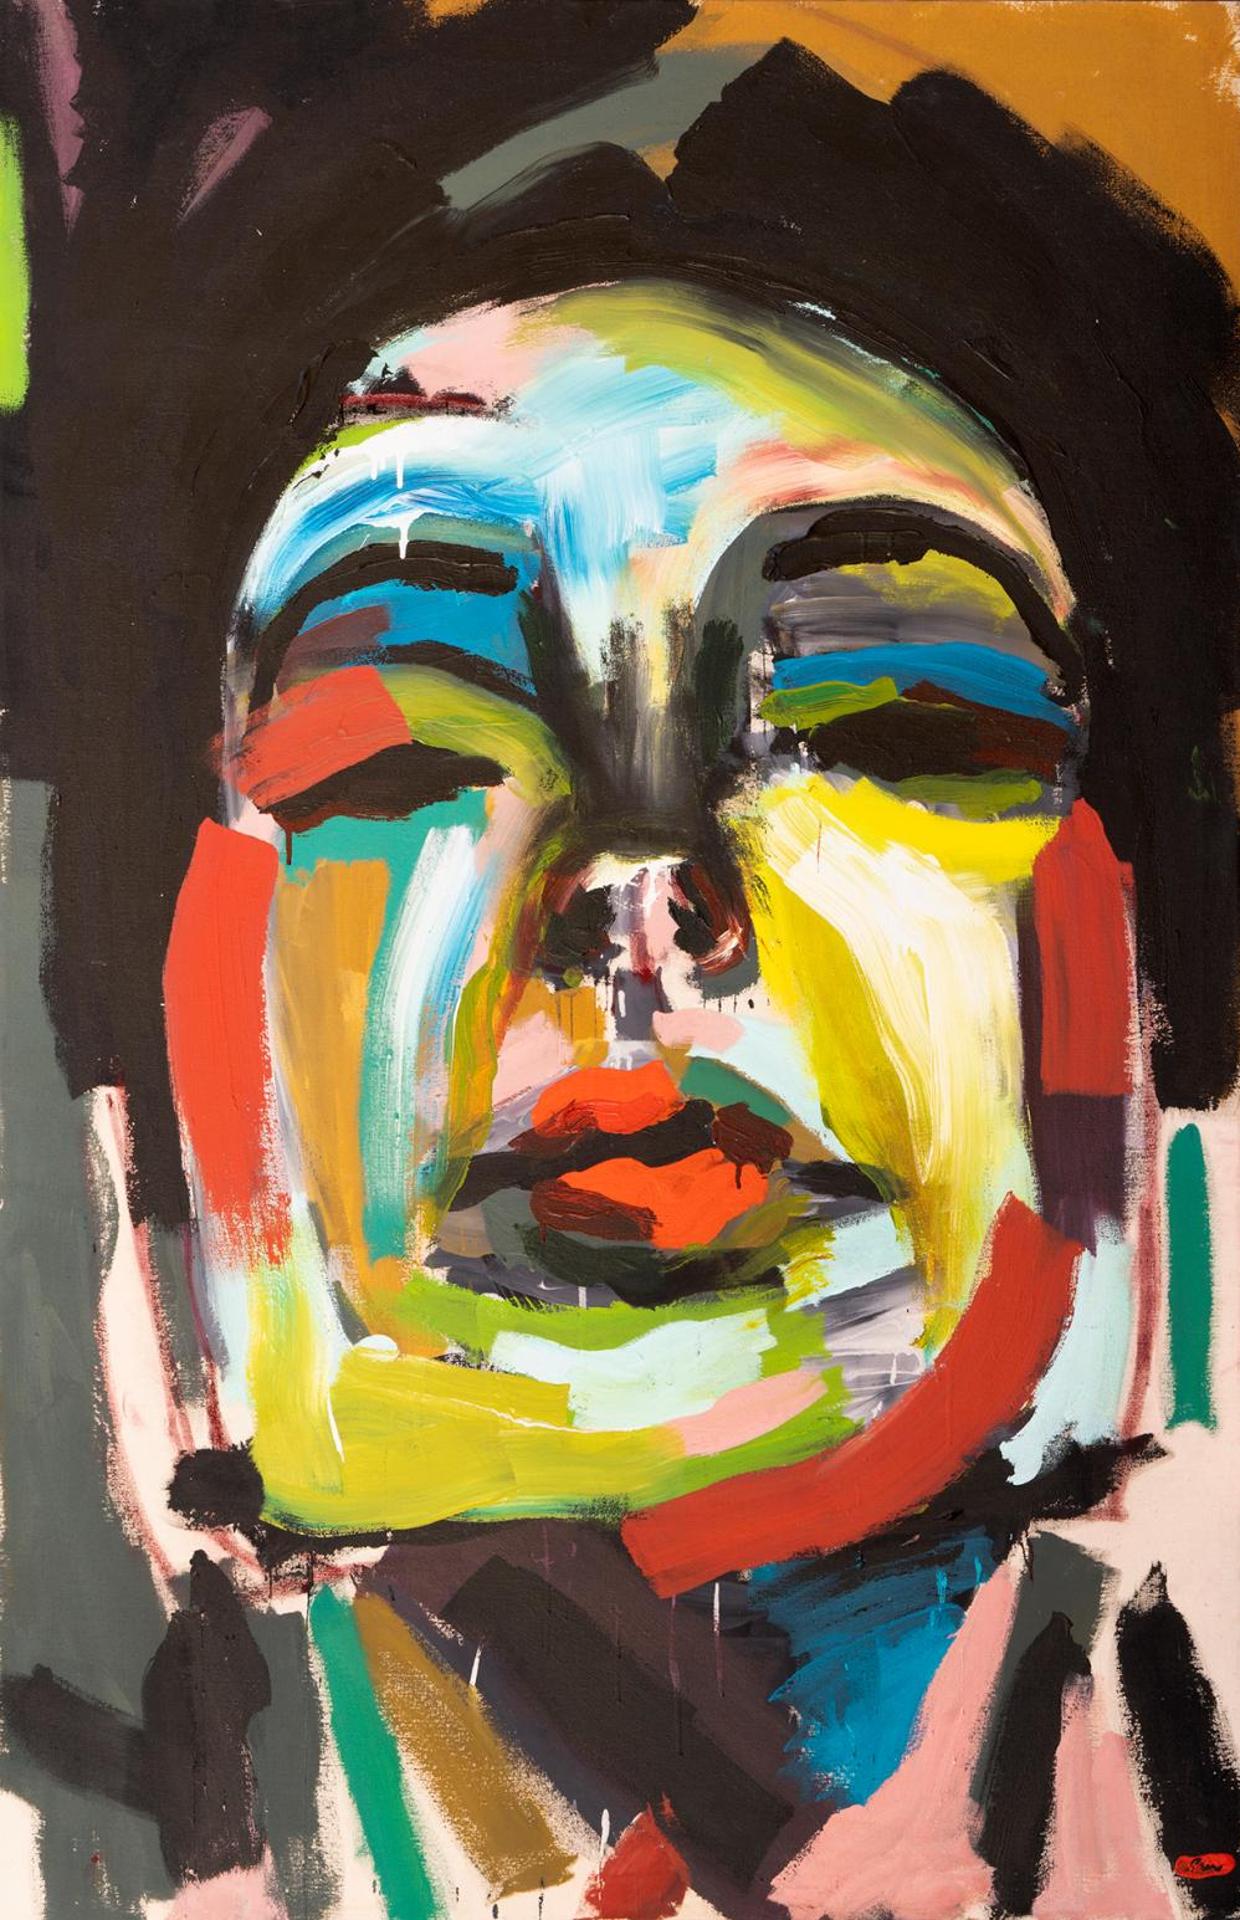 Brandi Hofer (1986) - Untitled - Self-Portrait